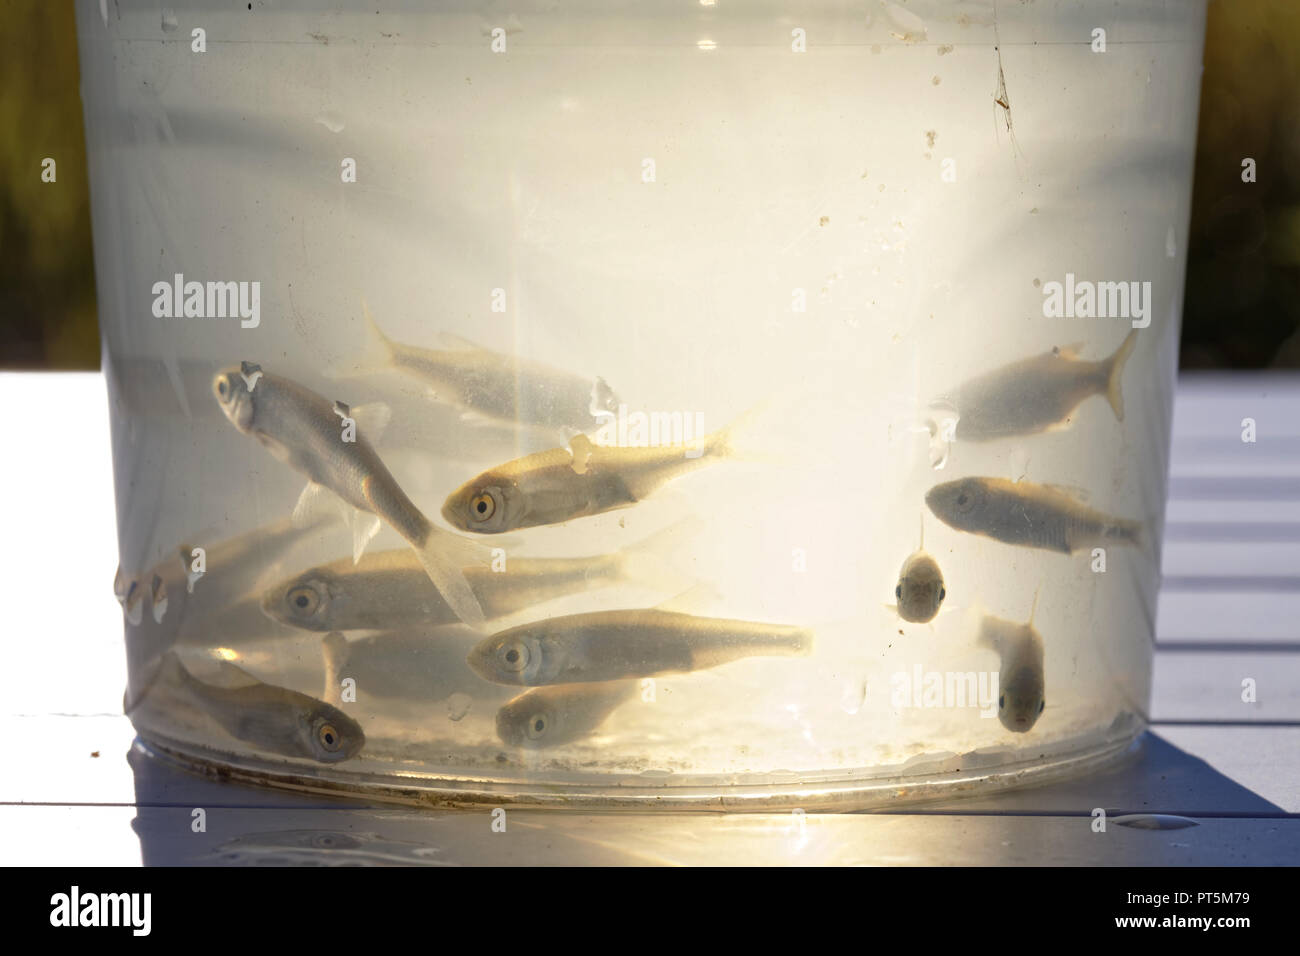 Small live silver minnows as bait for predatory fish in a plastic